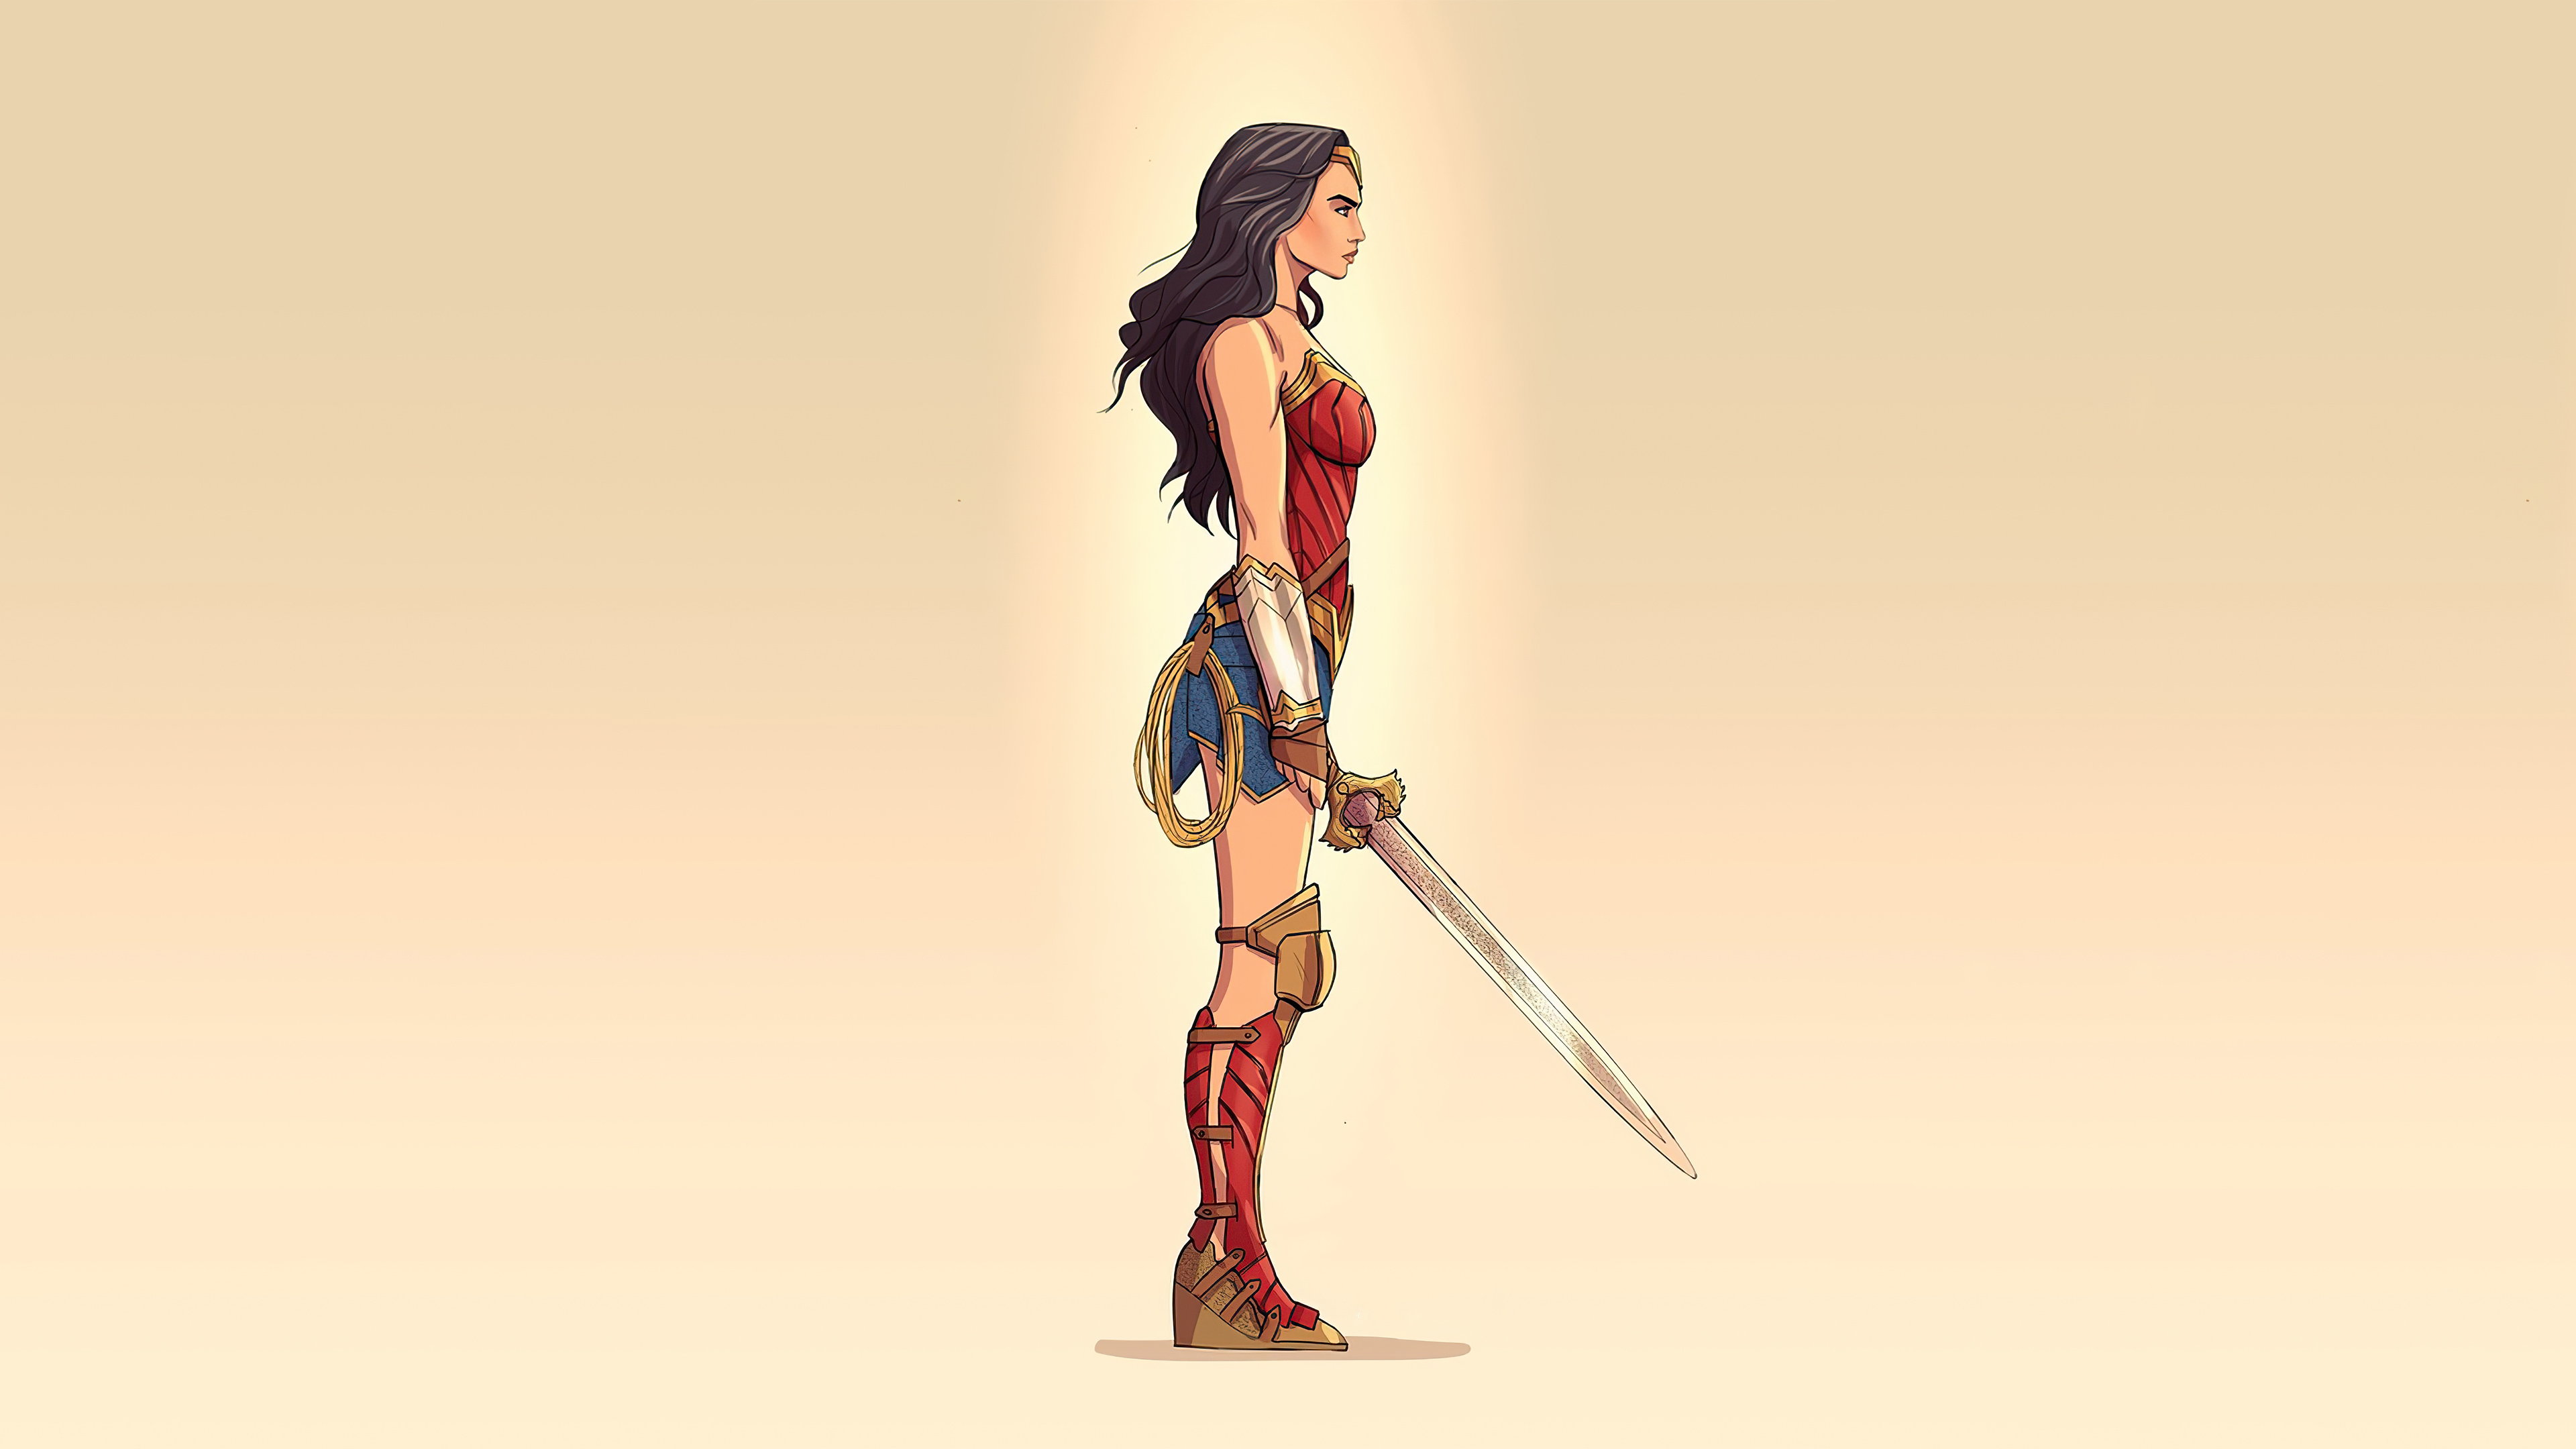 Wallpaper Minimalist Illustration of Wonder Woman